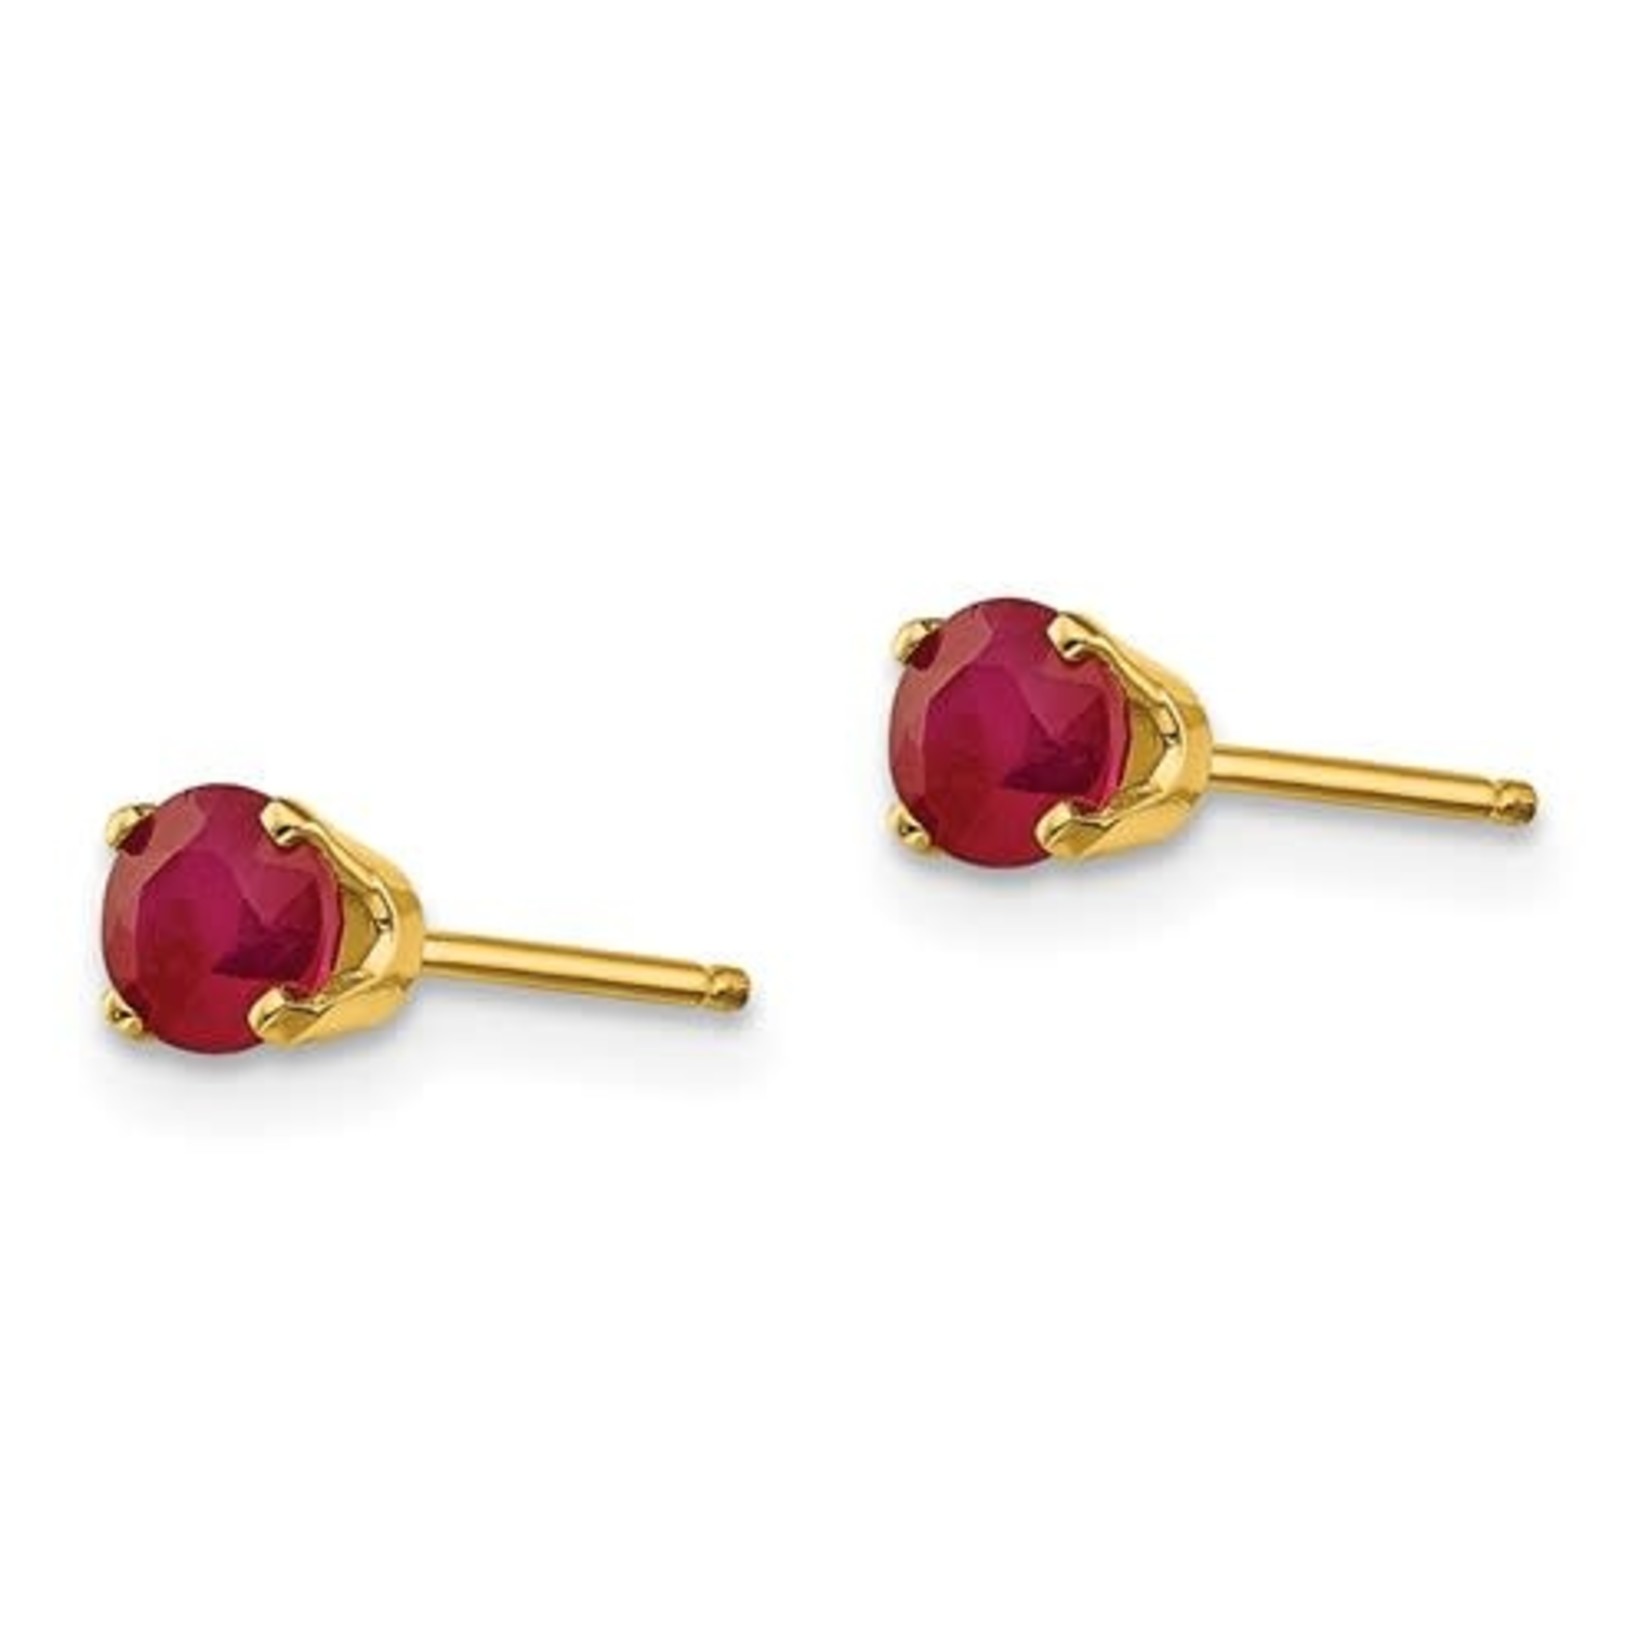 QUALITY GOLD OF CINCINNATI INC 14K 4mm Ruby Earrings